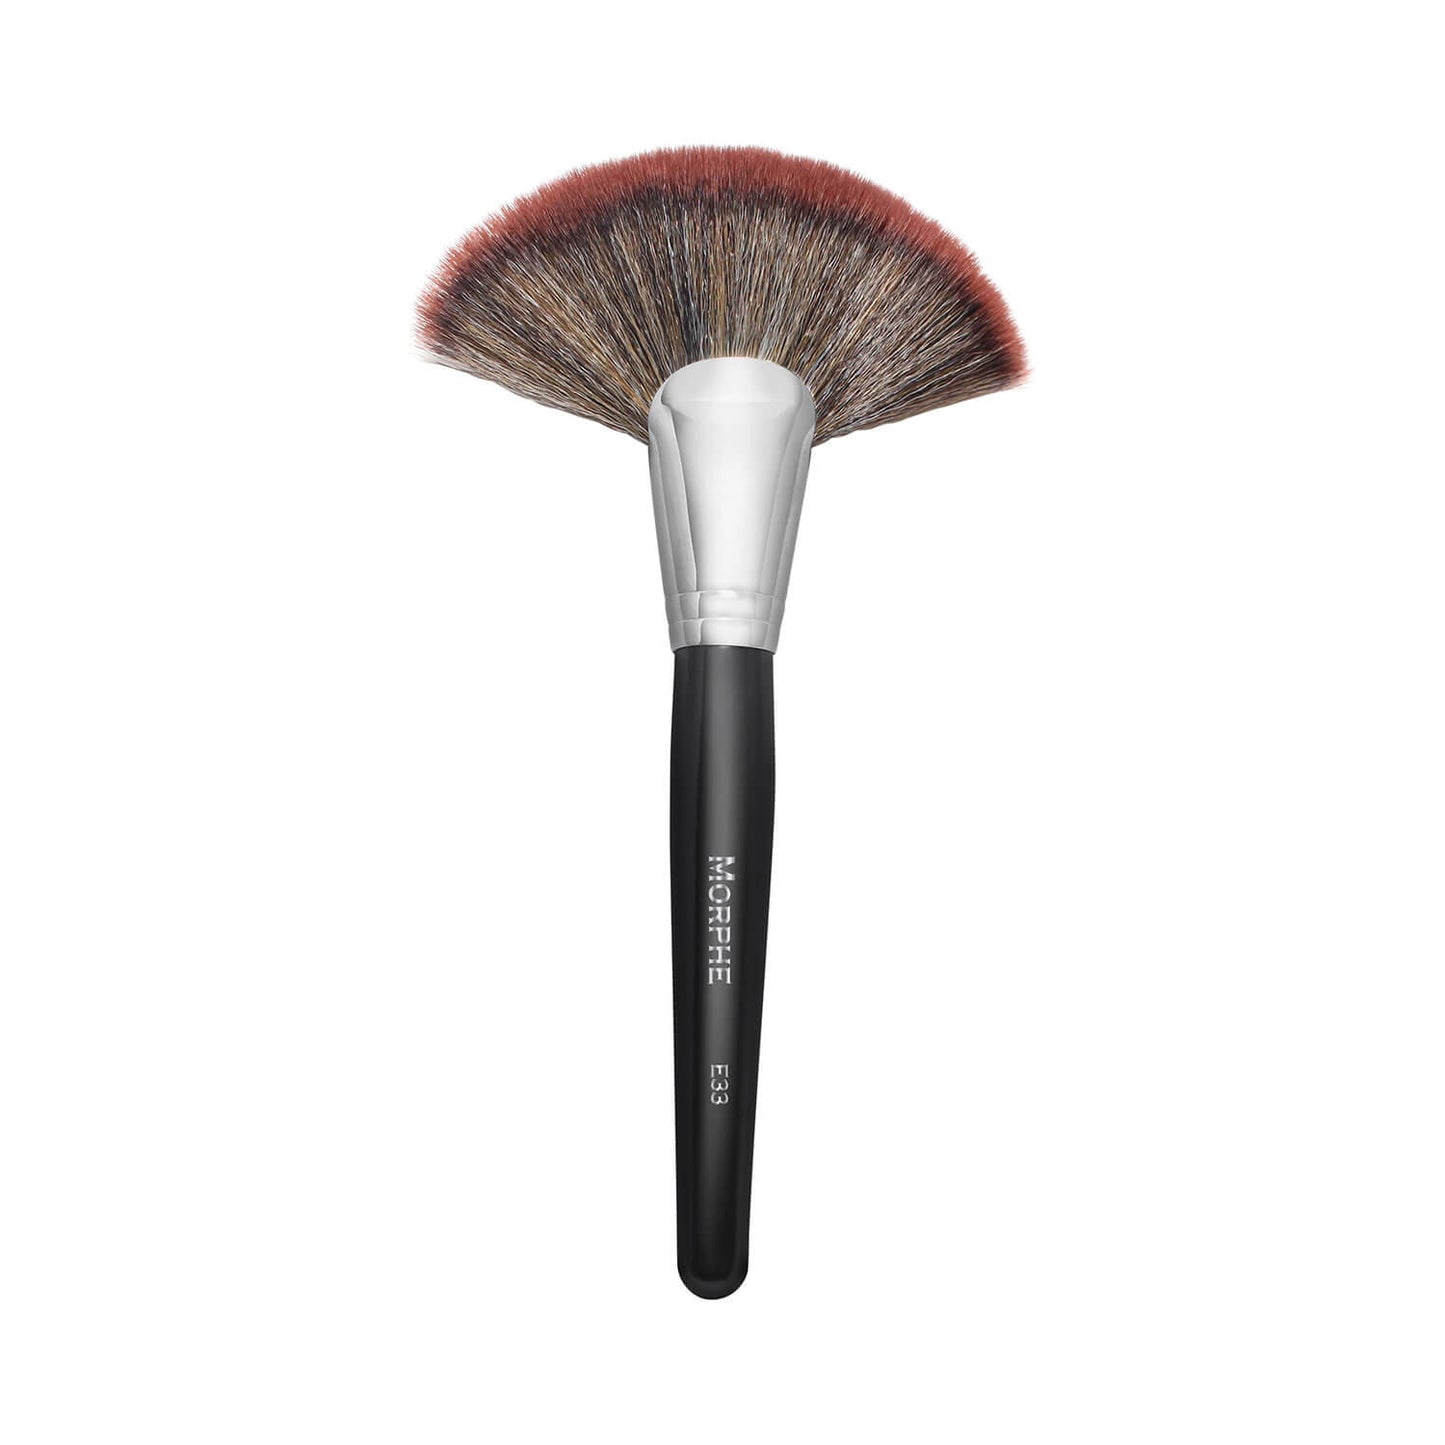 Morphe Cosmetics E33 Deluxe Fan Brush